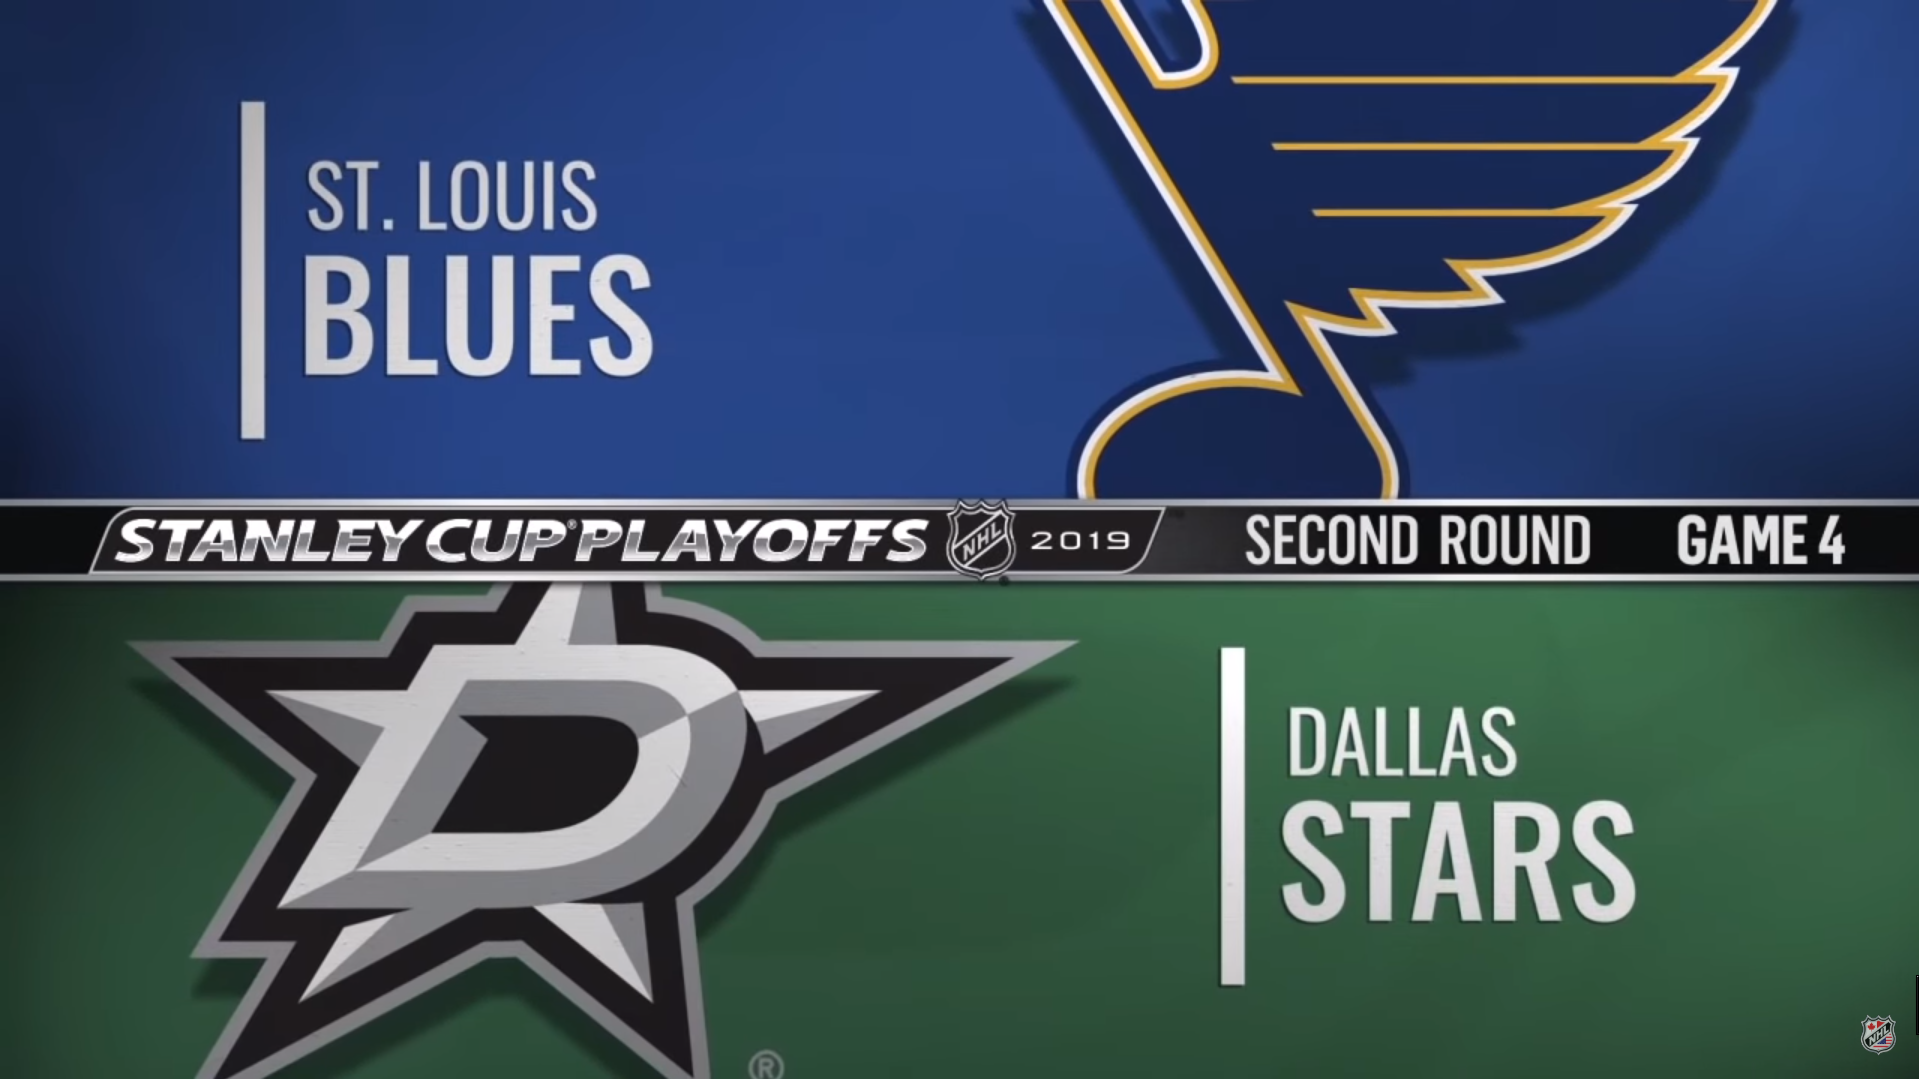 Game 5. Dallas Stars - St. Louis Blues